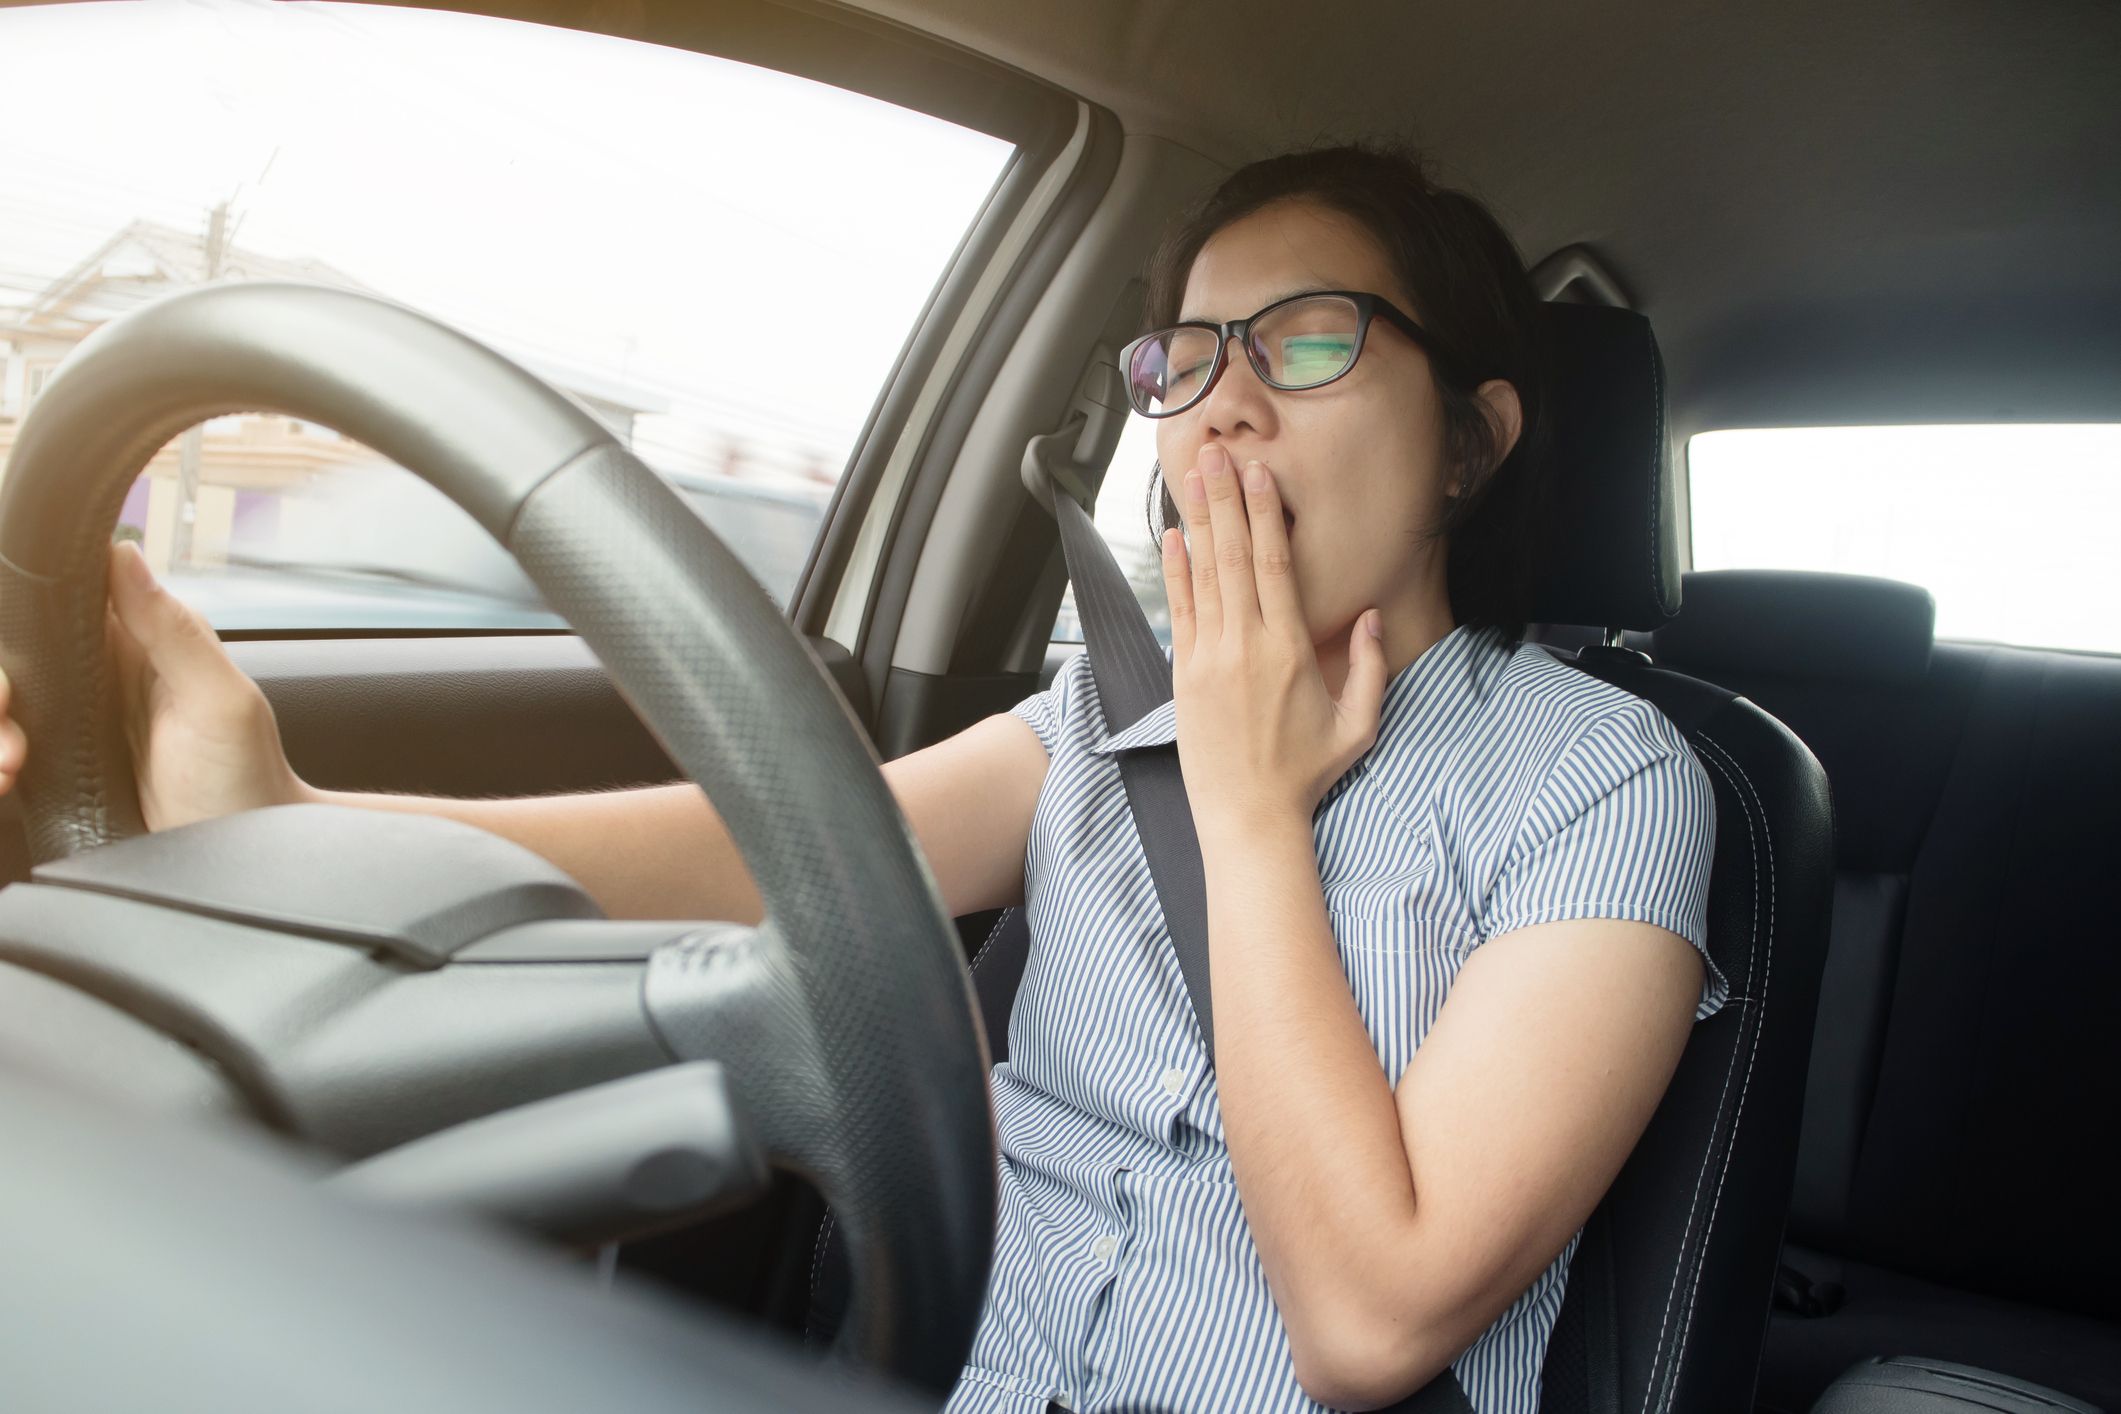 The risks of driver fatigue